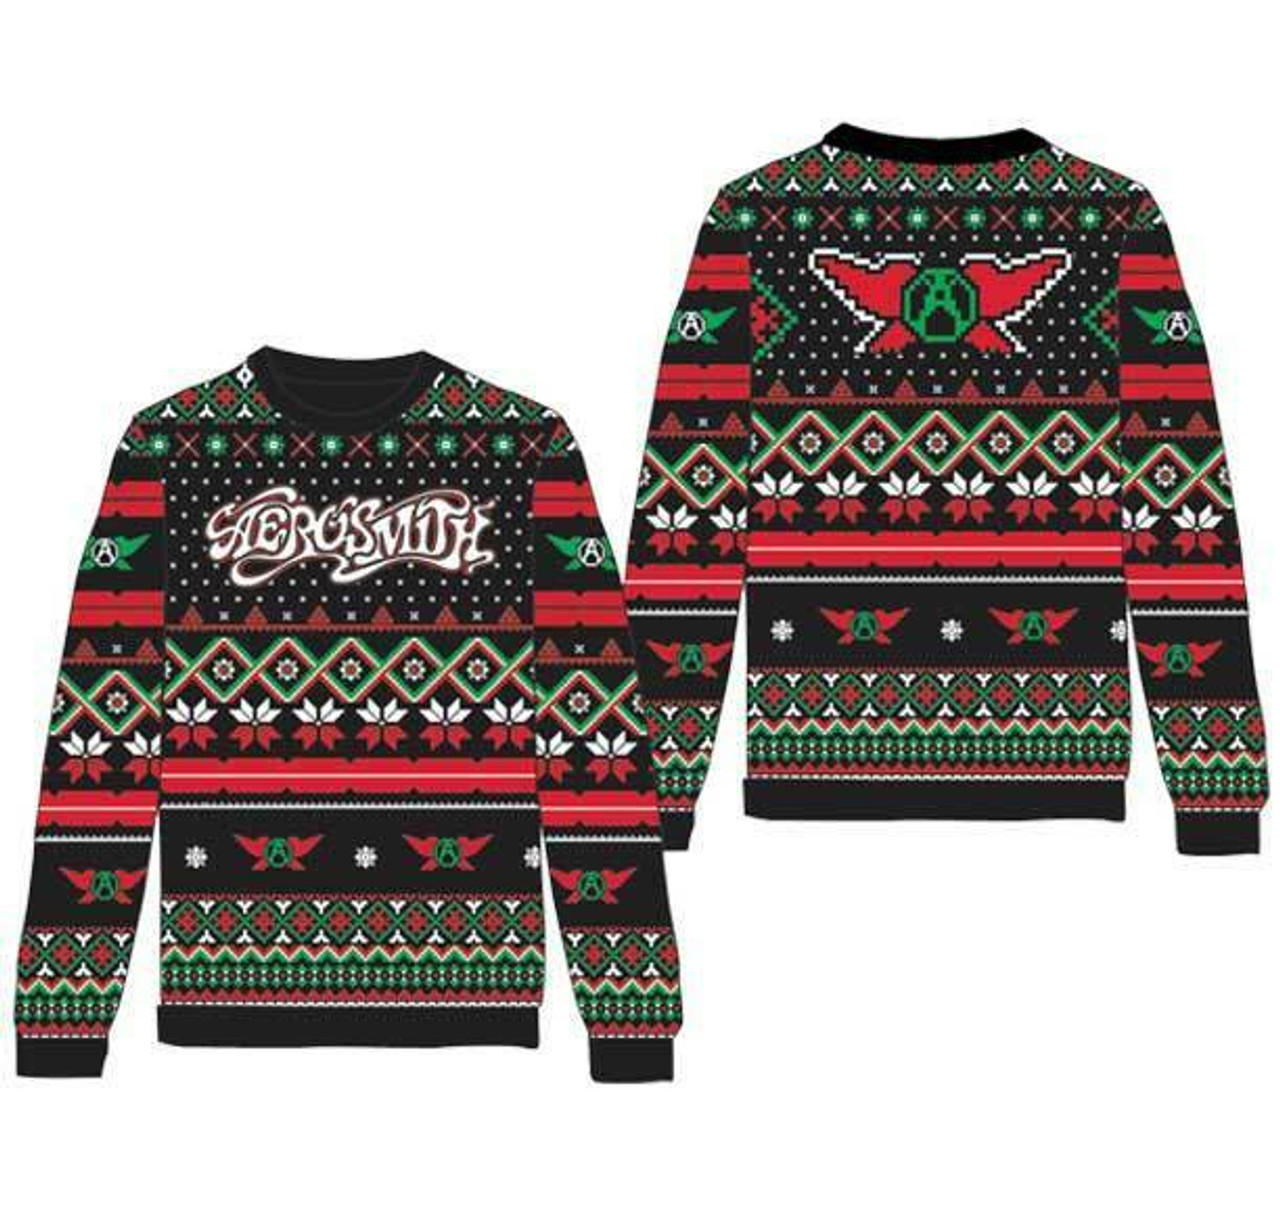 Aerosmith Rock and Roll Music Band Ugly Holiday Christmas Sweater 838440093 - 2XL